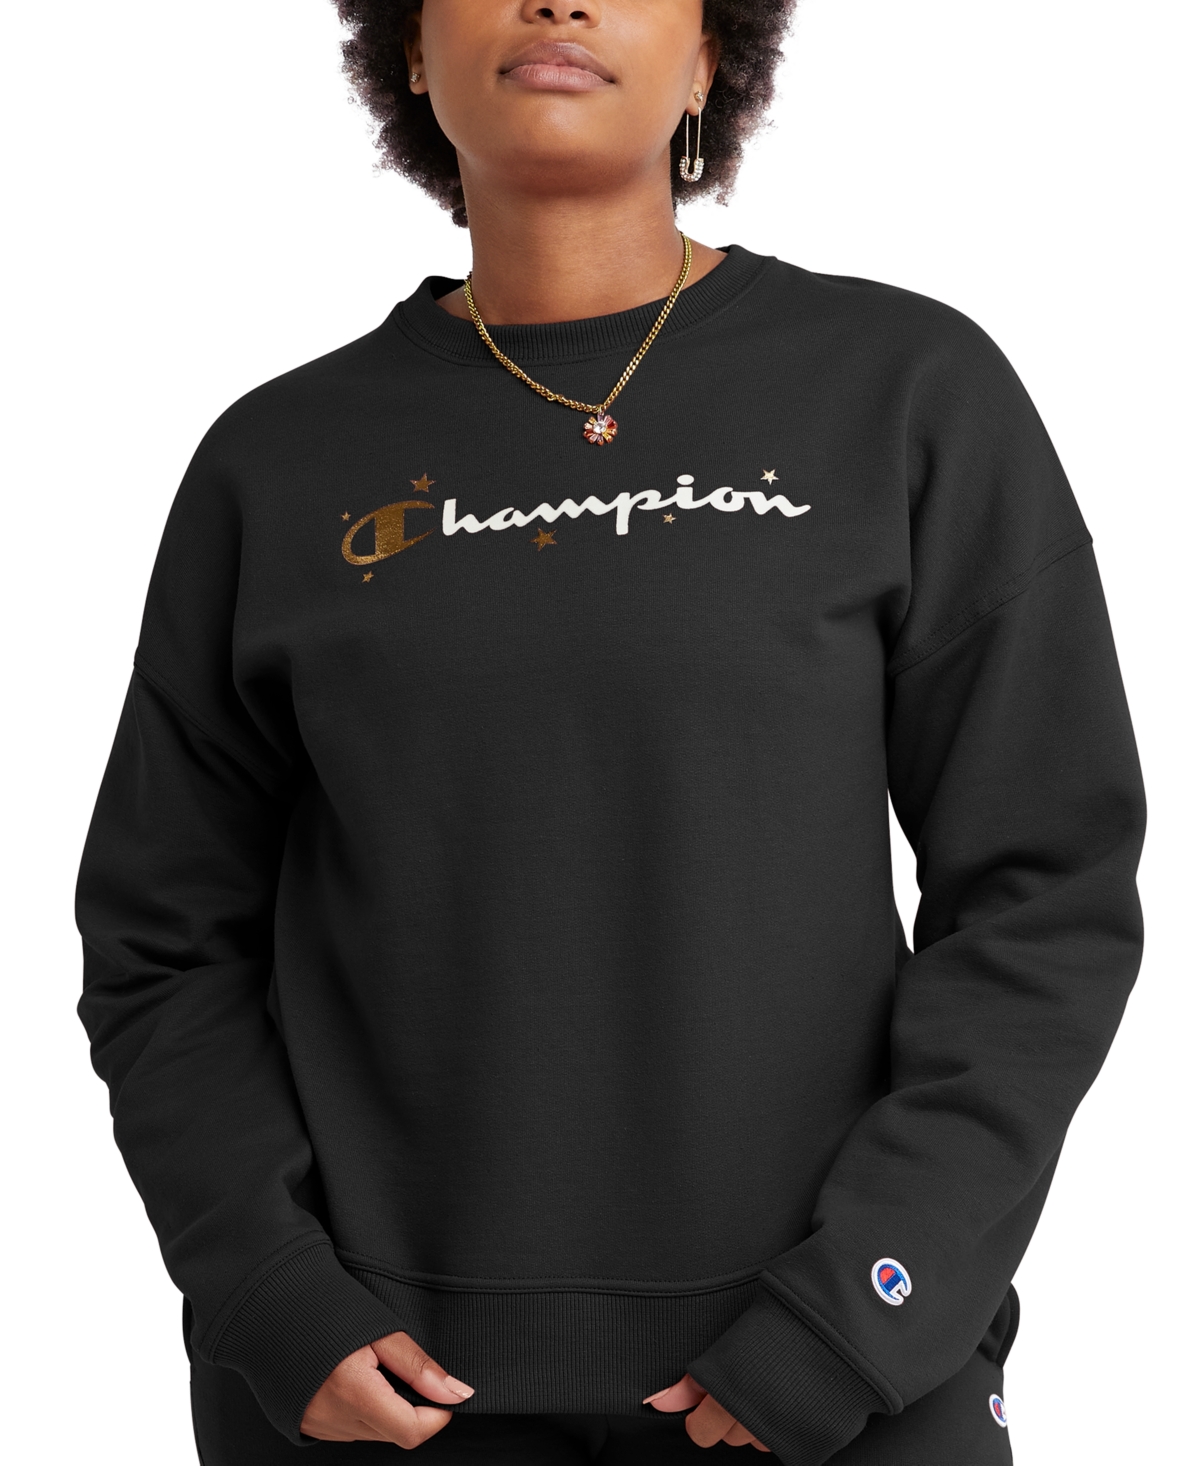  Champion Women's Star Logo Powerblend Crewneck Sweatshirt